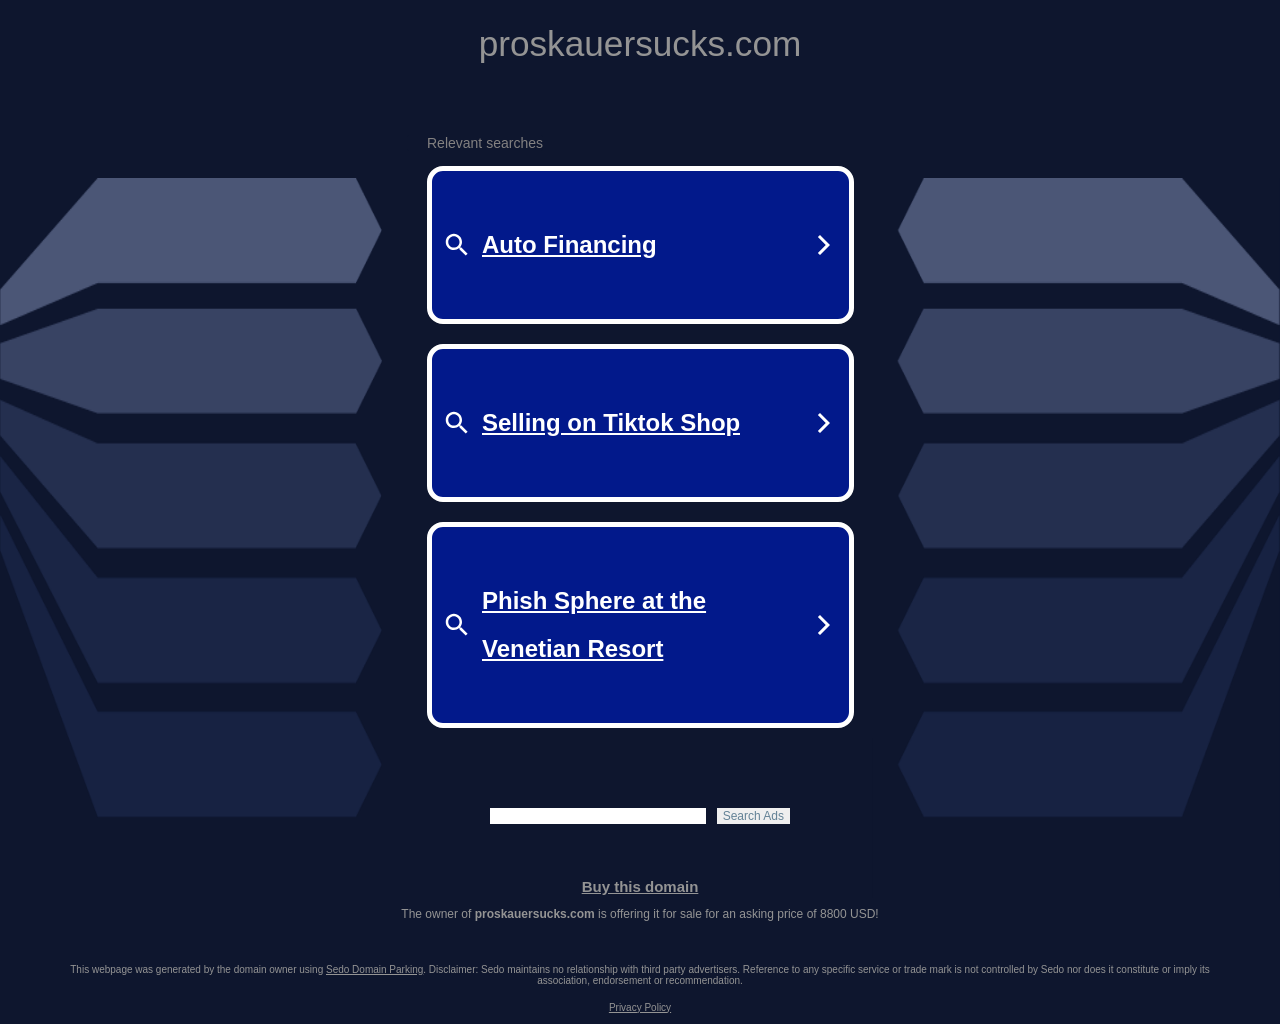 proskauersucks.com